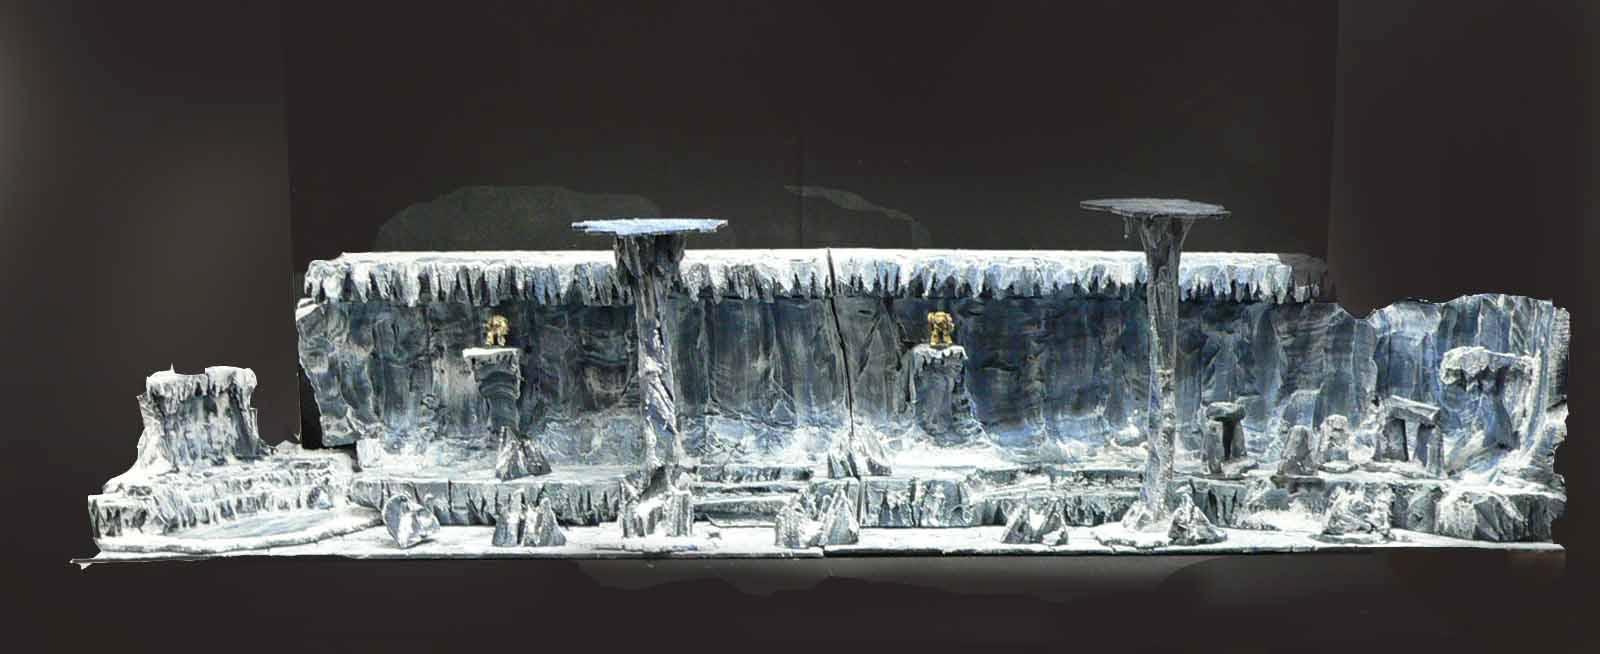 Ice Wall, Full display